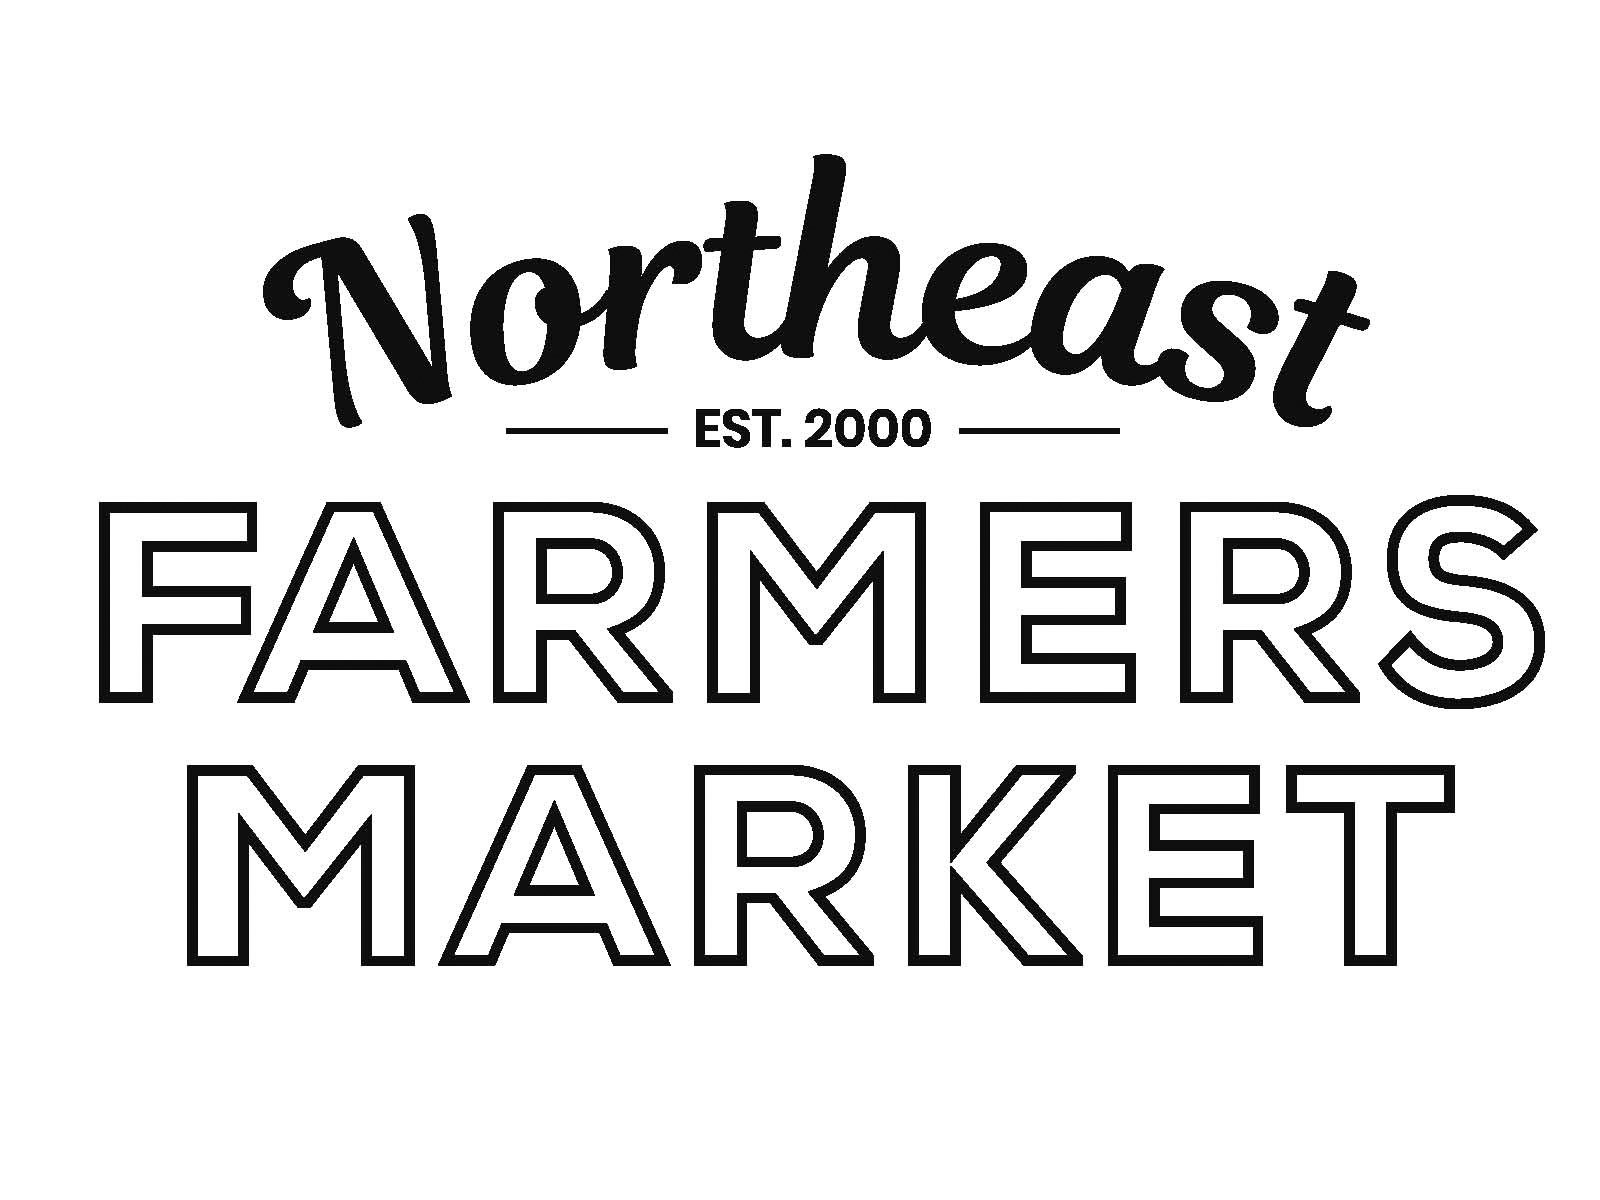 Northeast Minneapolis Farmers Market